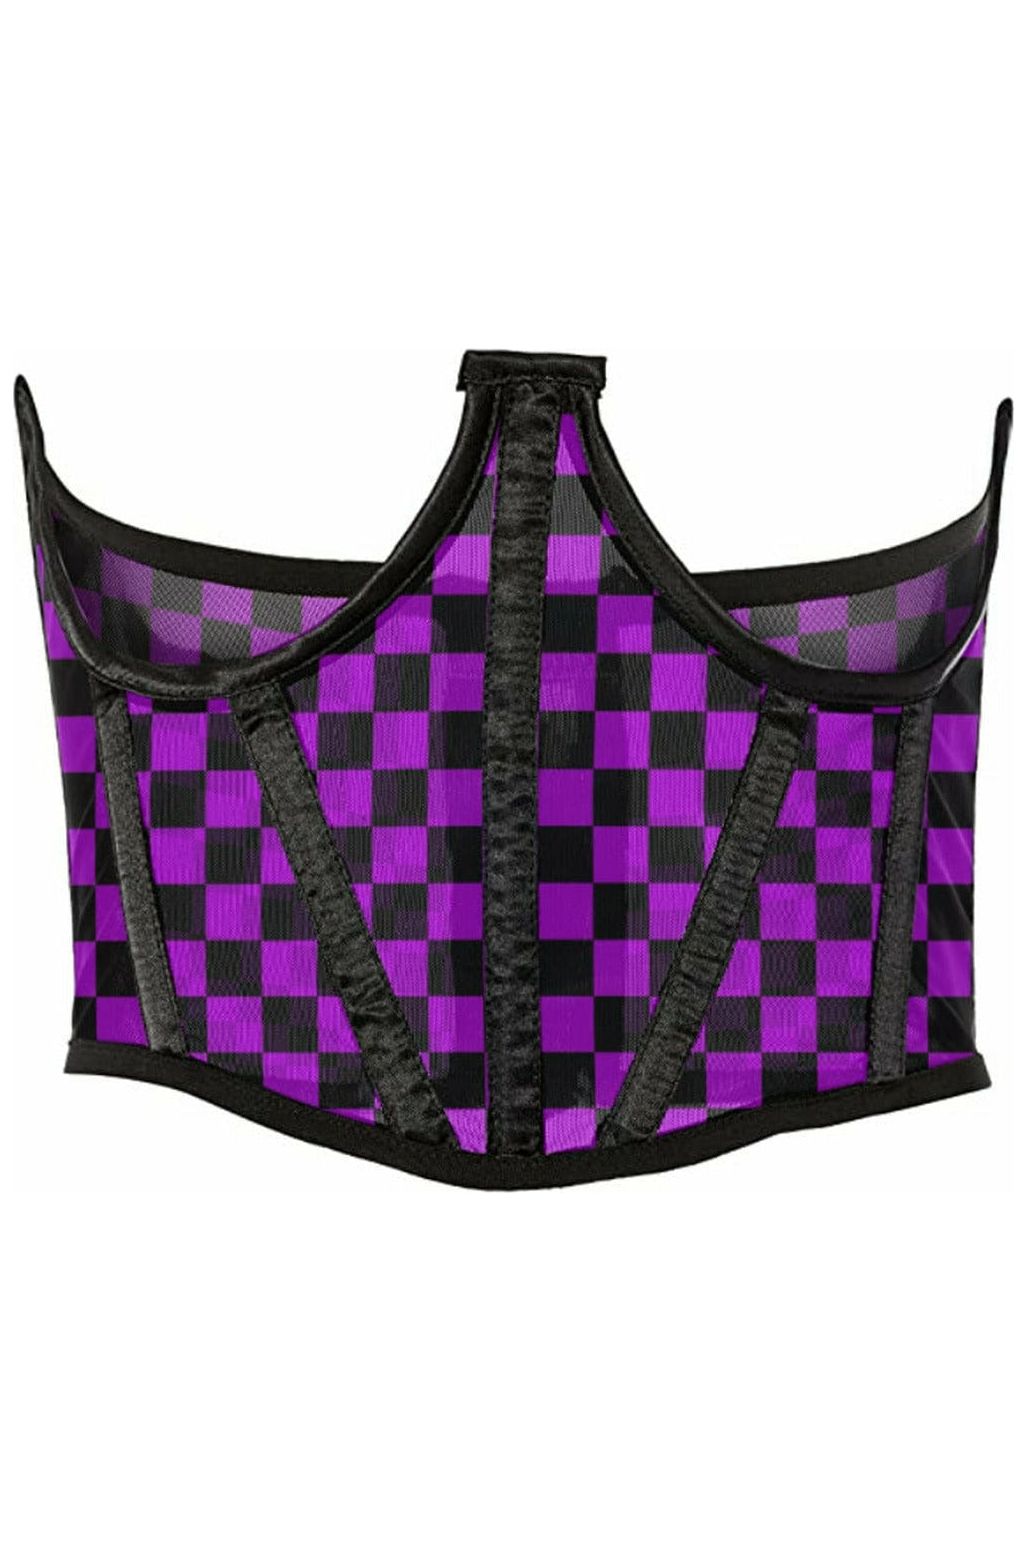 Lavish Neon Purple/Black Checker Print Mesh Open Cup Waist Cincher